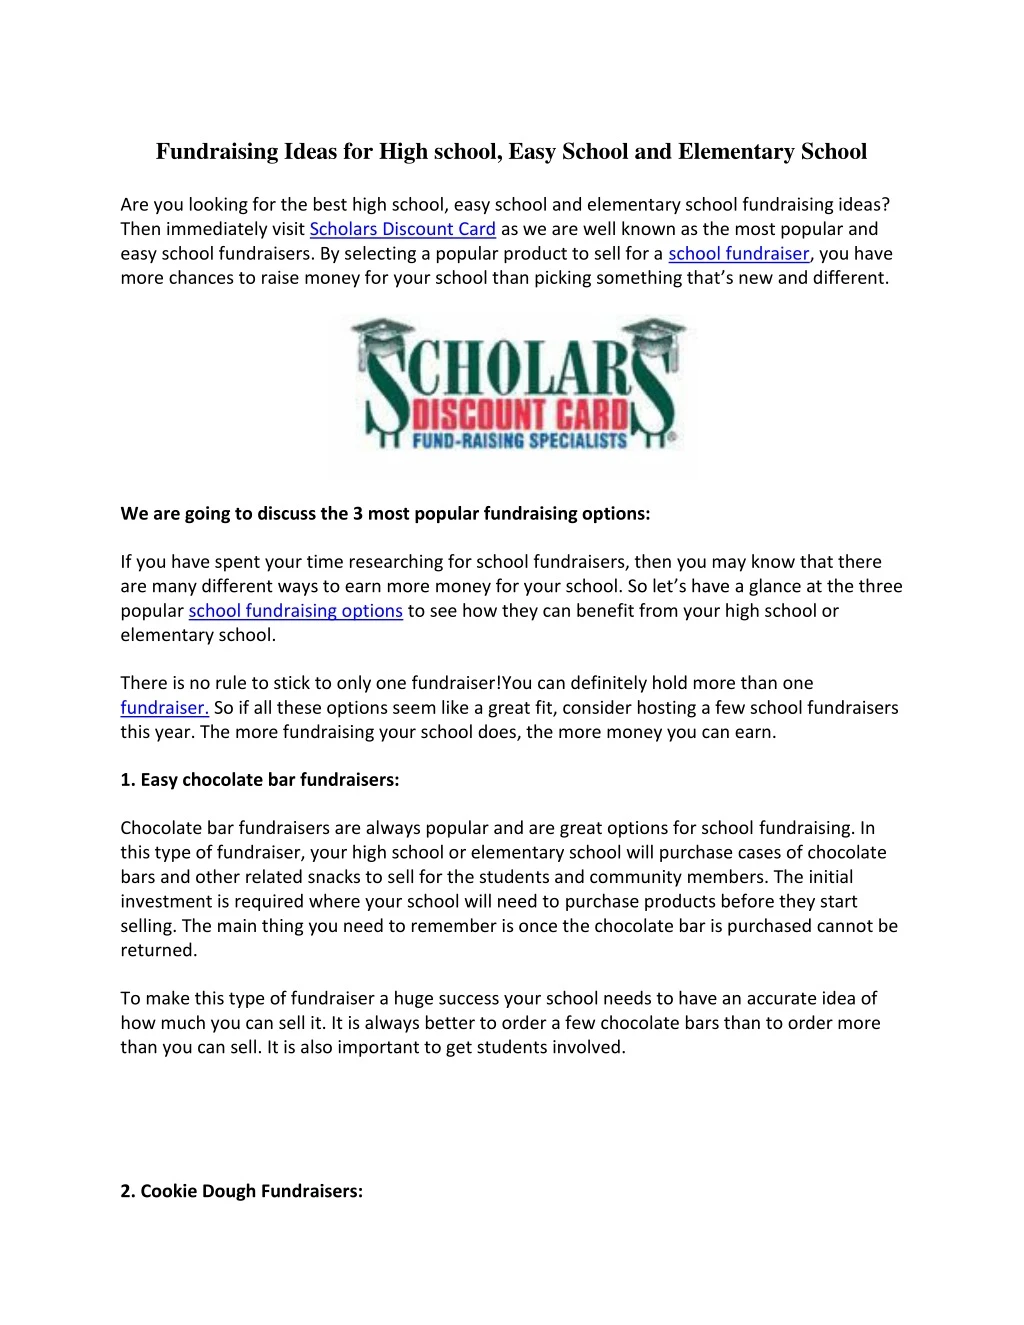 fundraising ideas for high school easy school